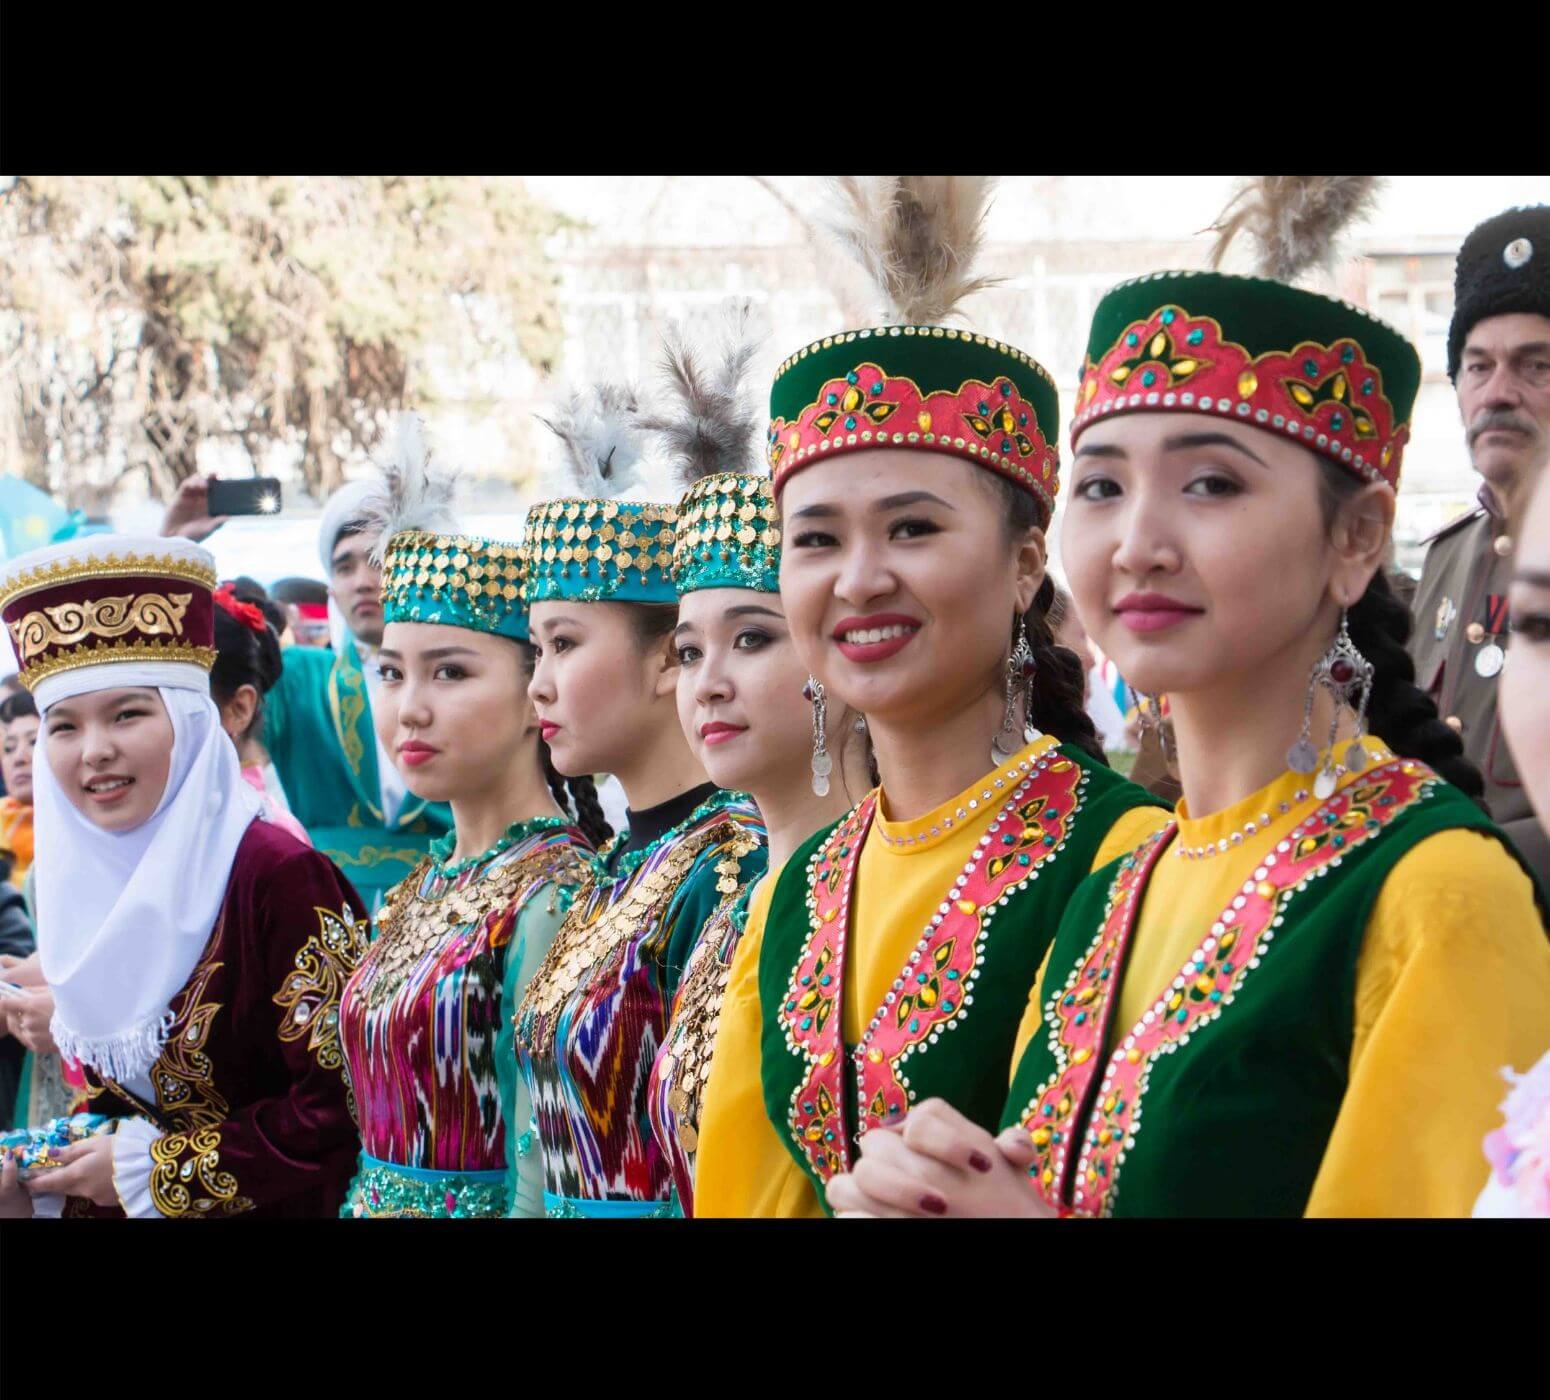 Kazakh people